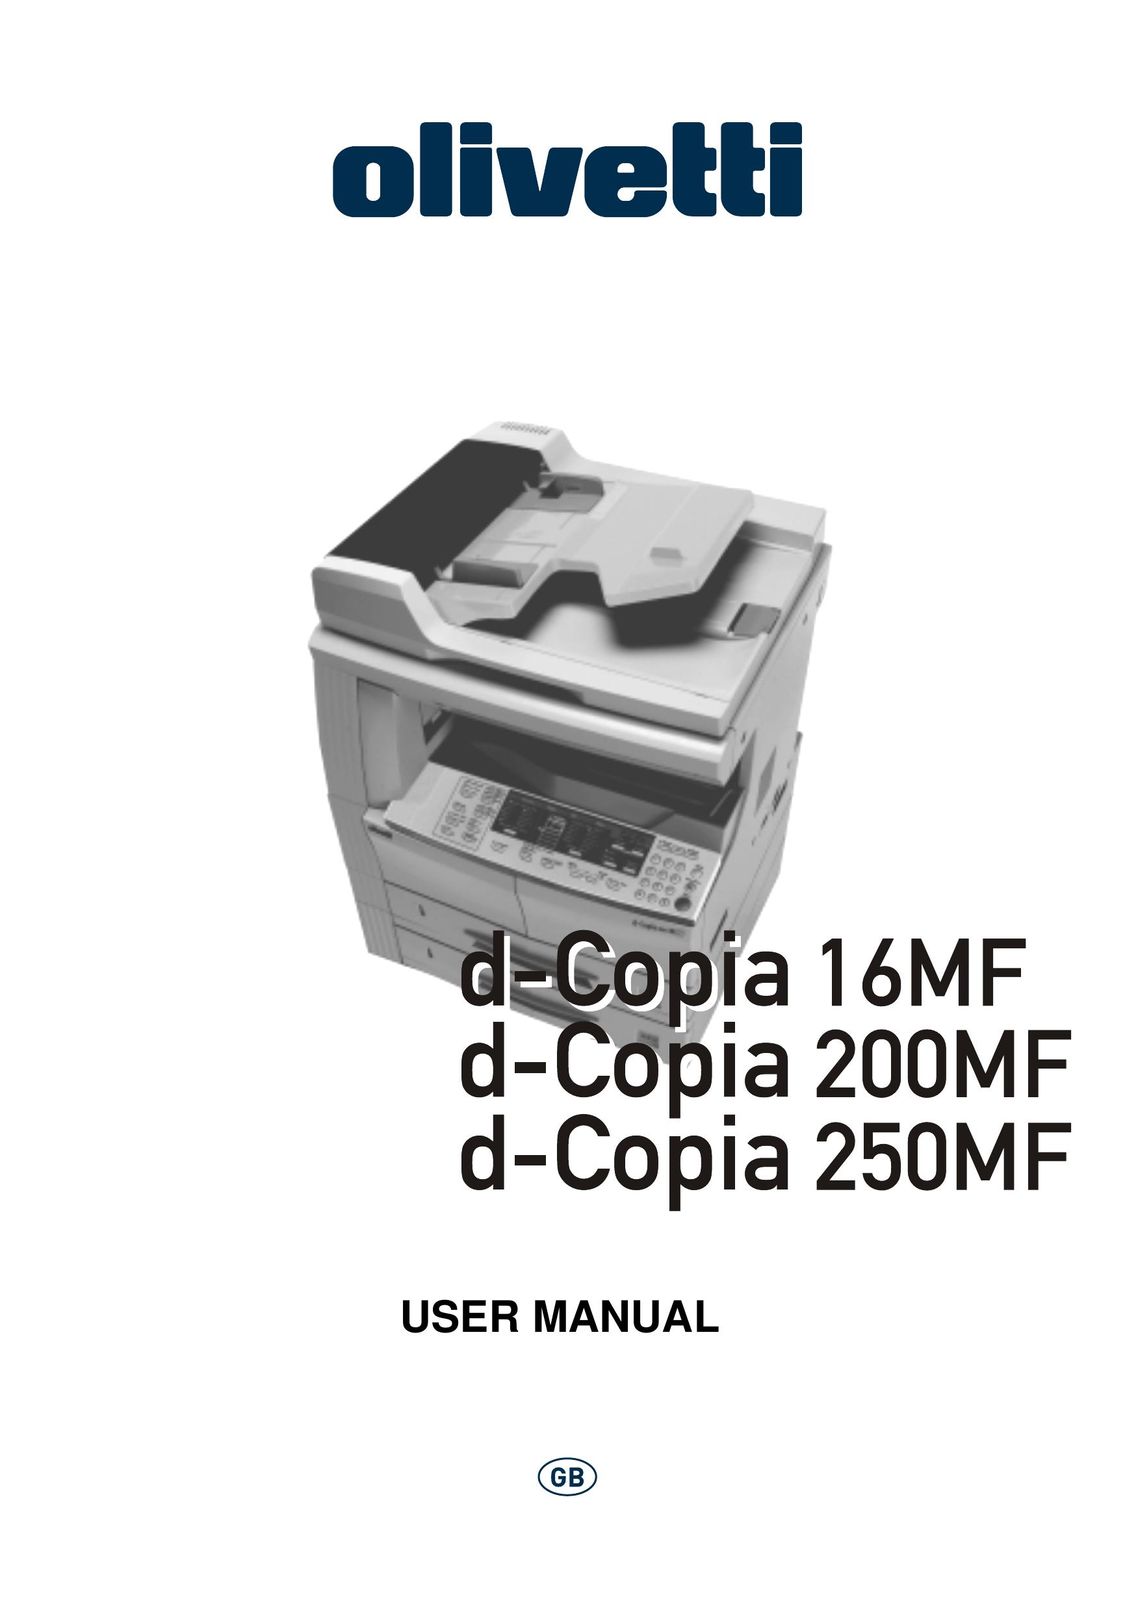 Olivetti 200MF Printer User Manual